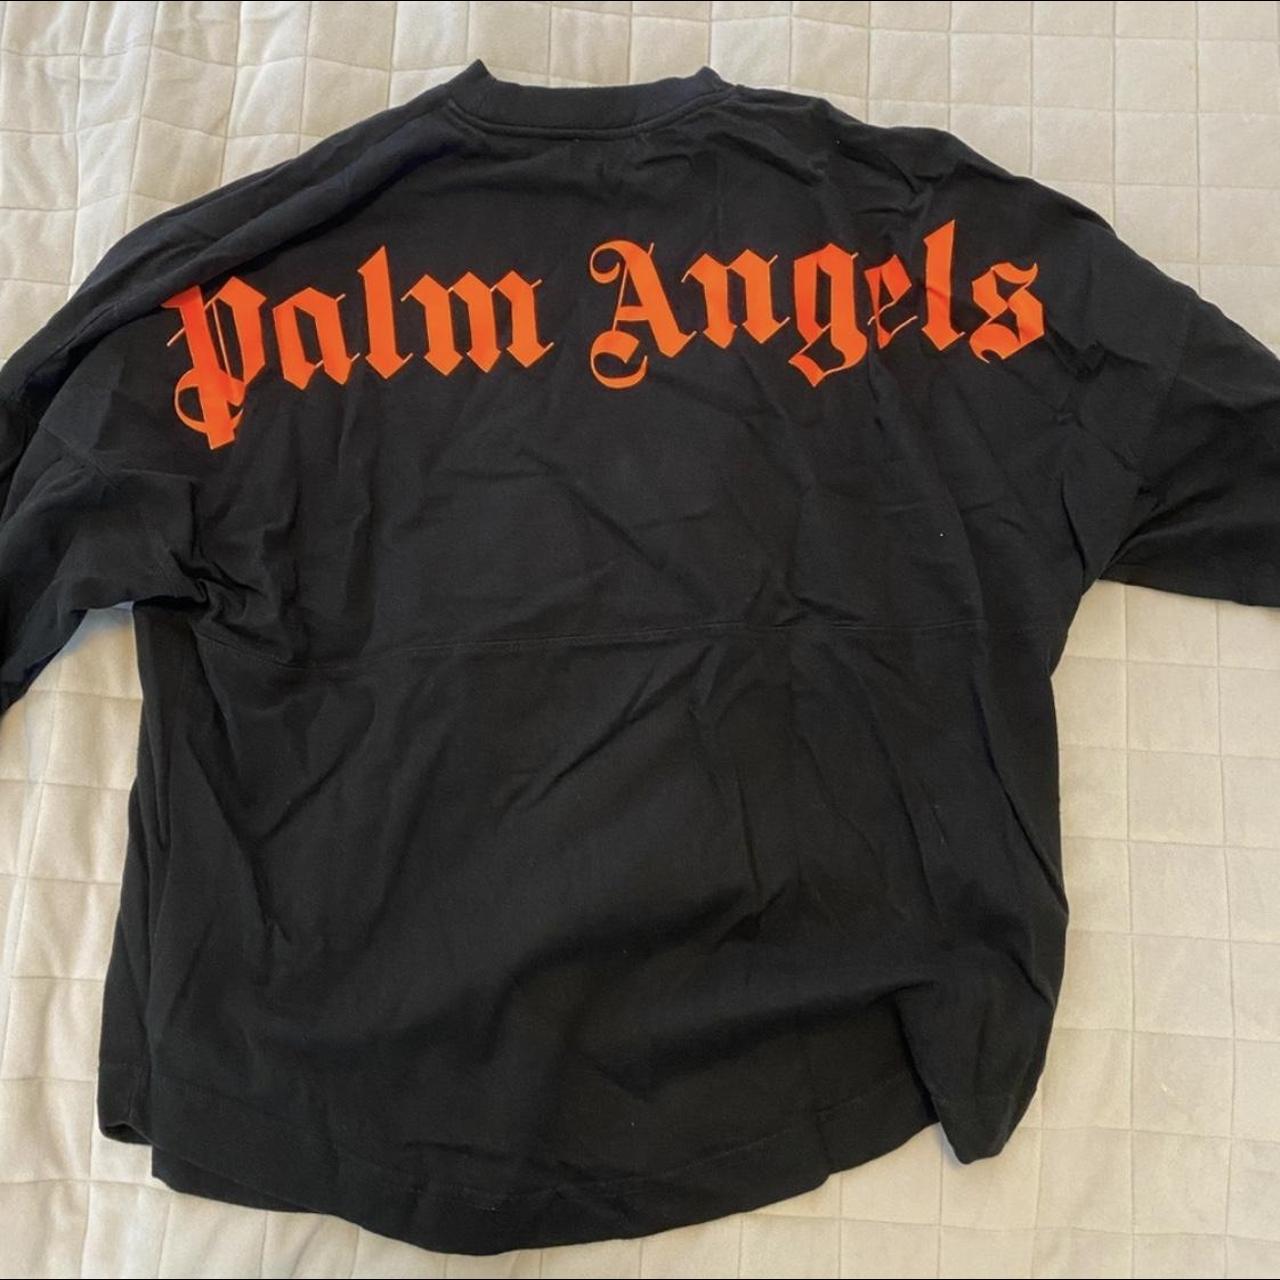 Palm Angels Women's Black and Orange T-shirt